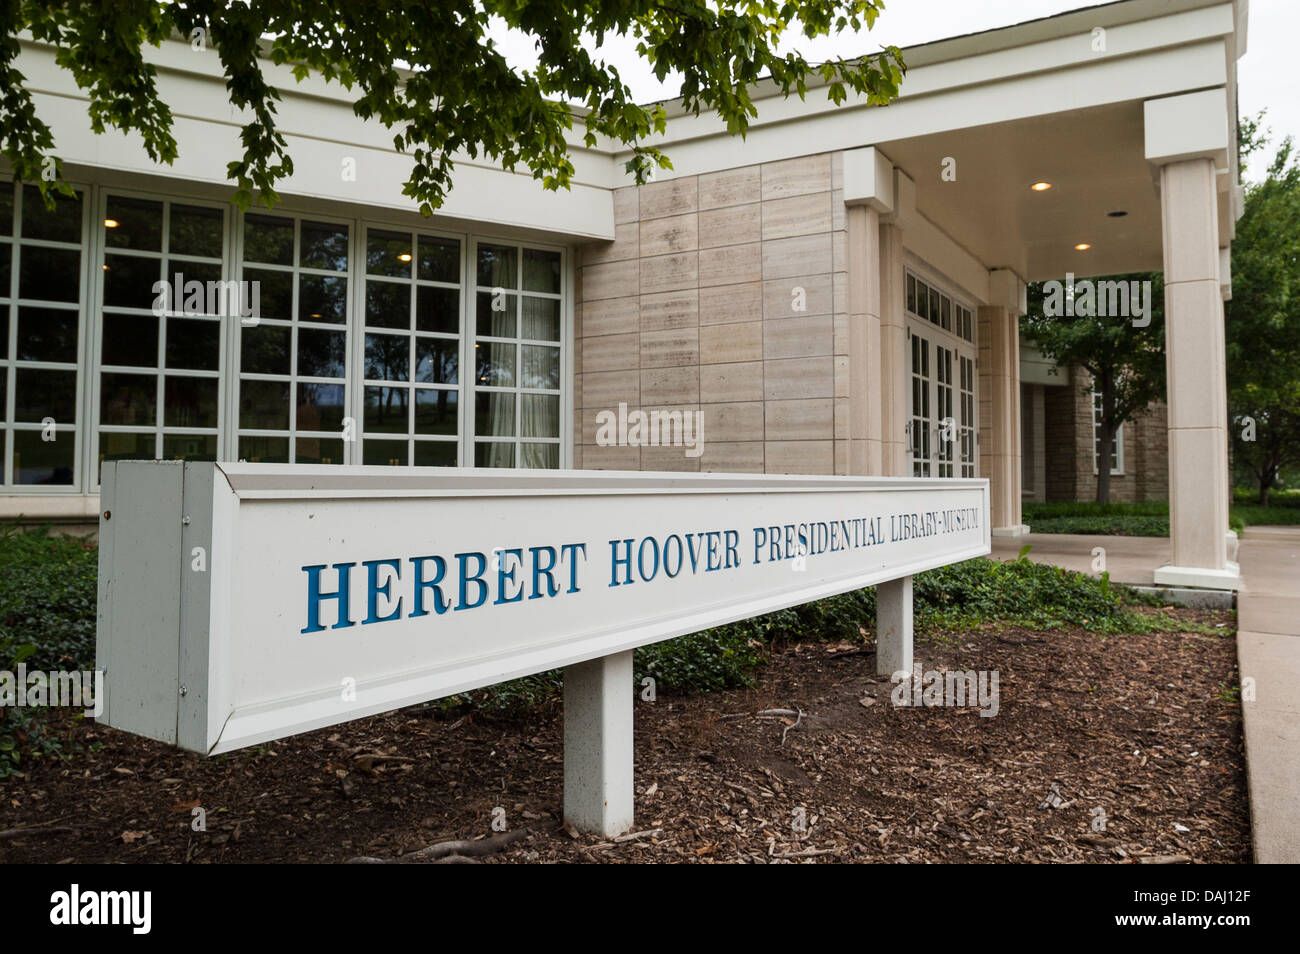 Herbert Hoover Presidential Library and Museum, ramo Ovest, Iowa, Stati Uniti d'America Foto Stock